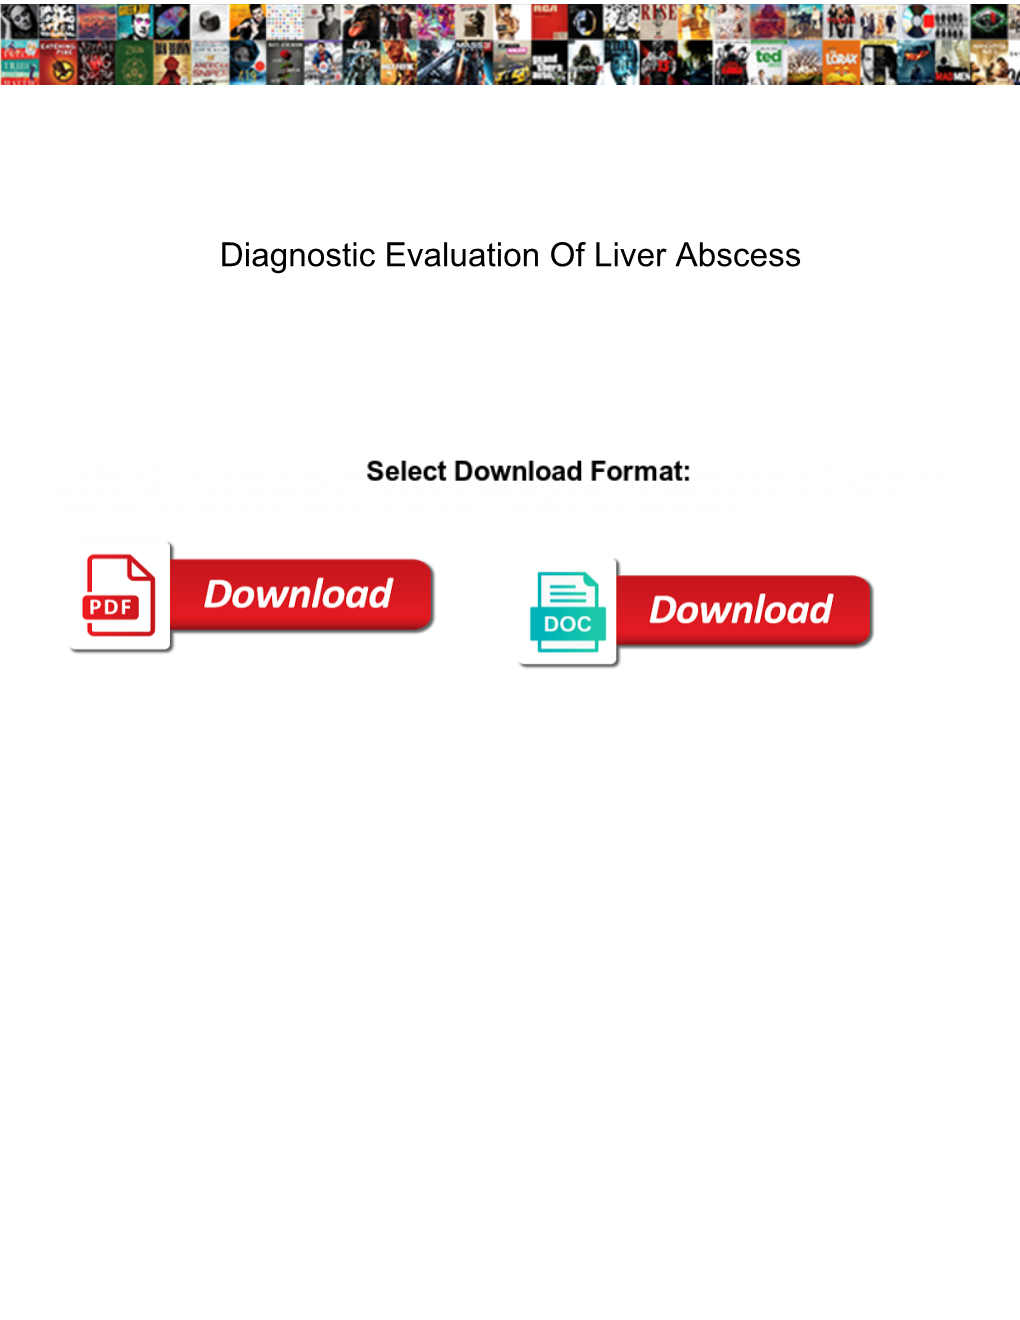 Diagnostic Evaluation of Liver Abscess